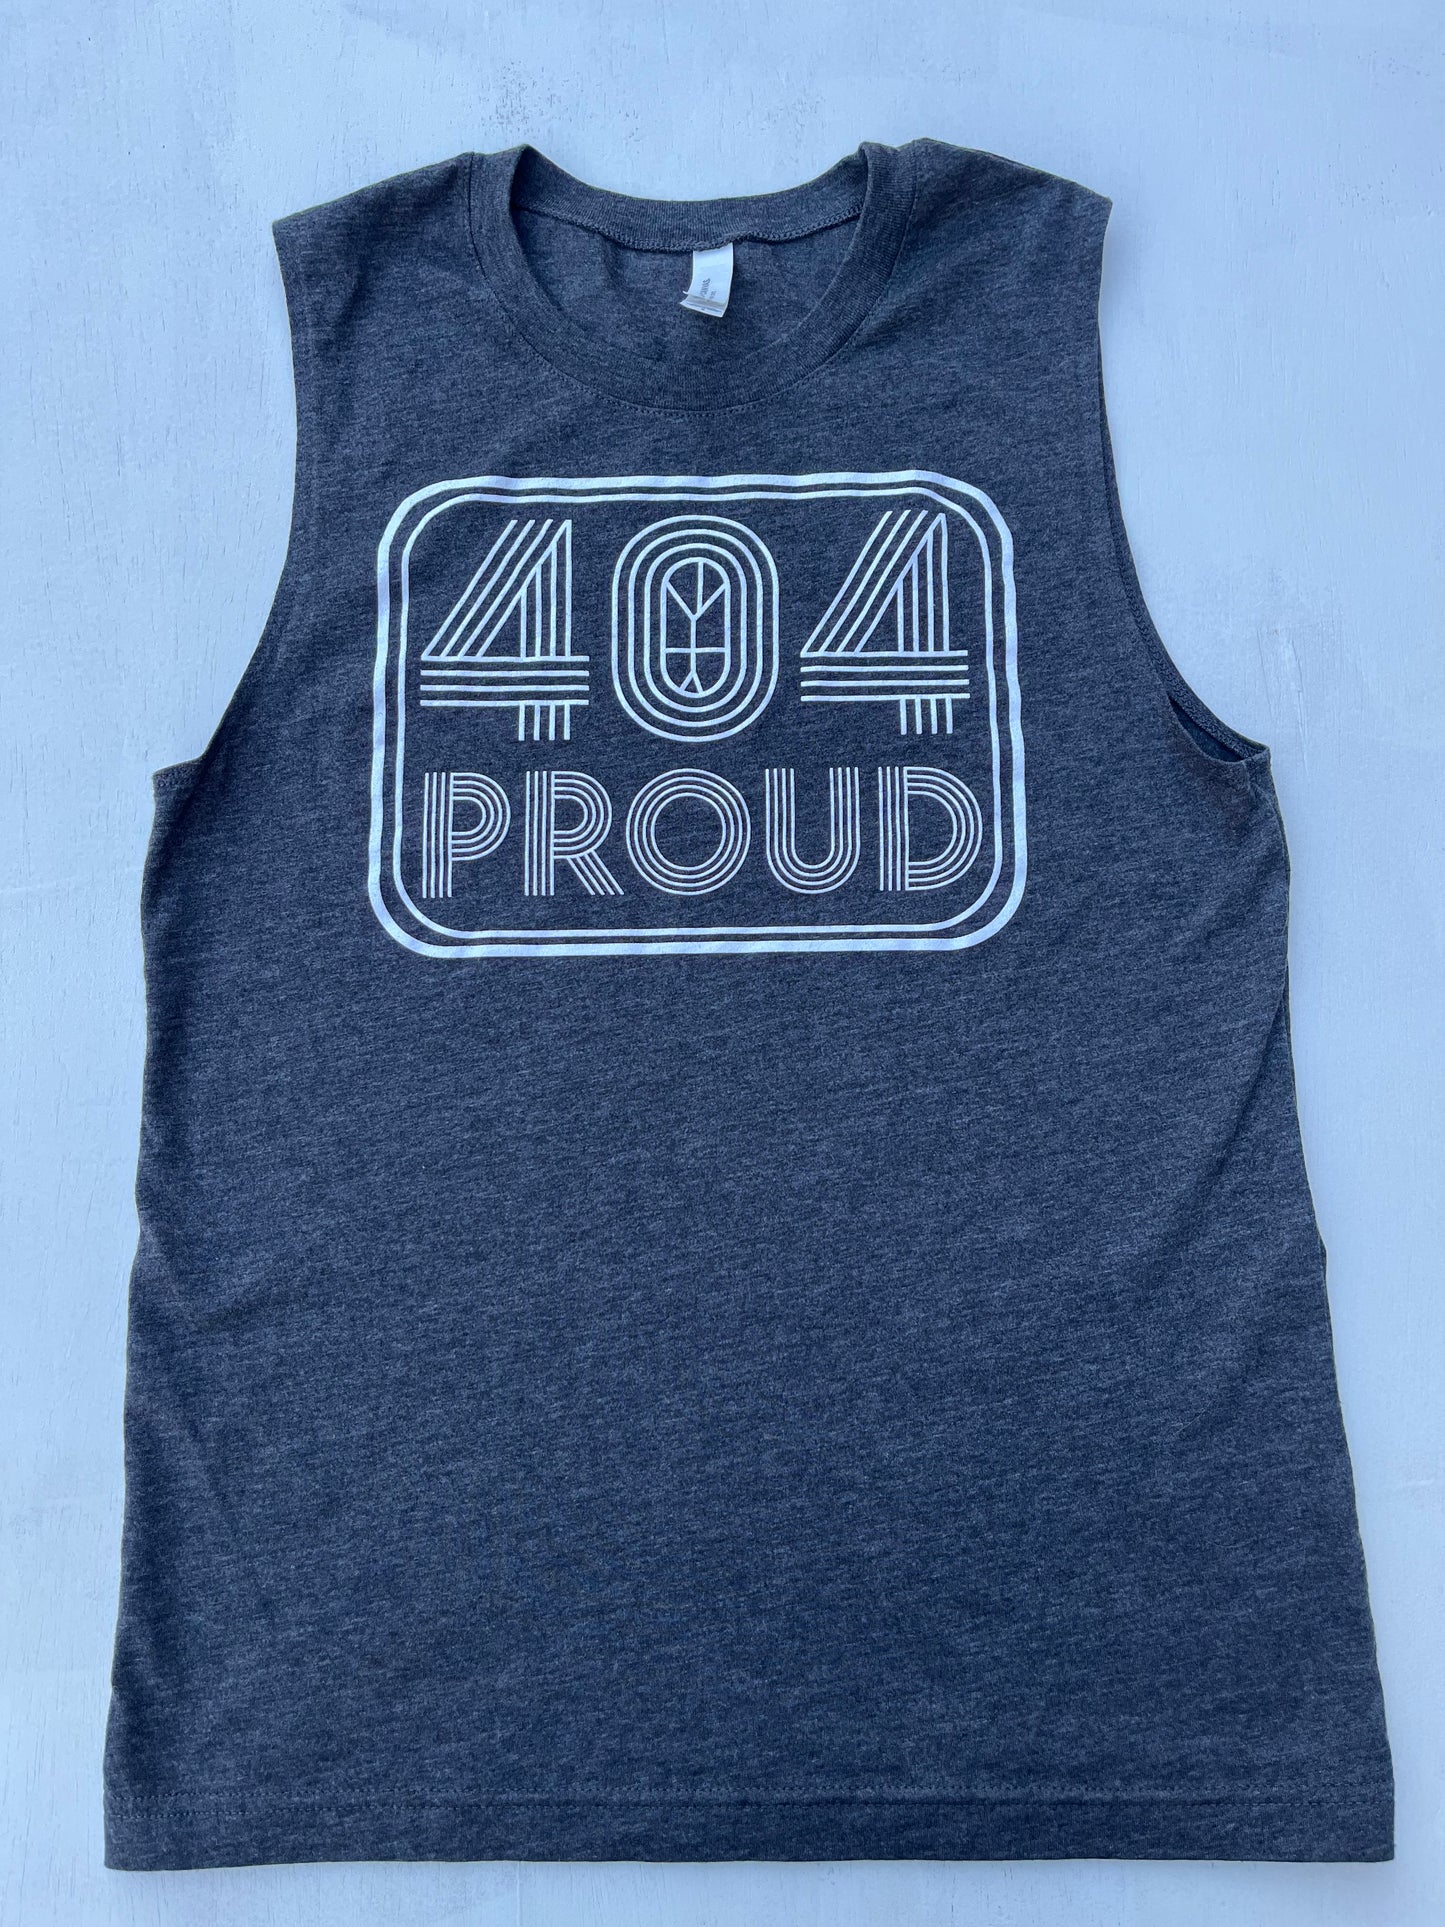 404 Proud Logo Charcoal Grey Muscle Tank